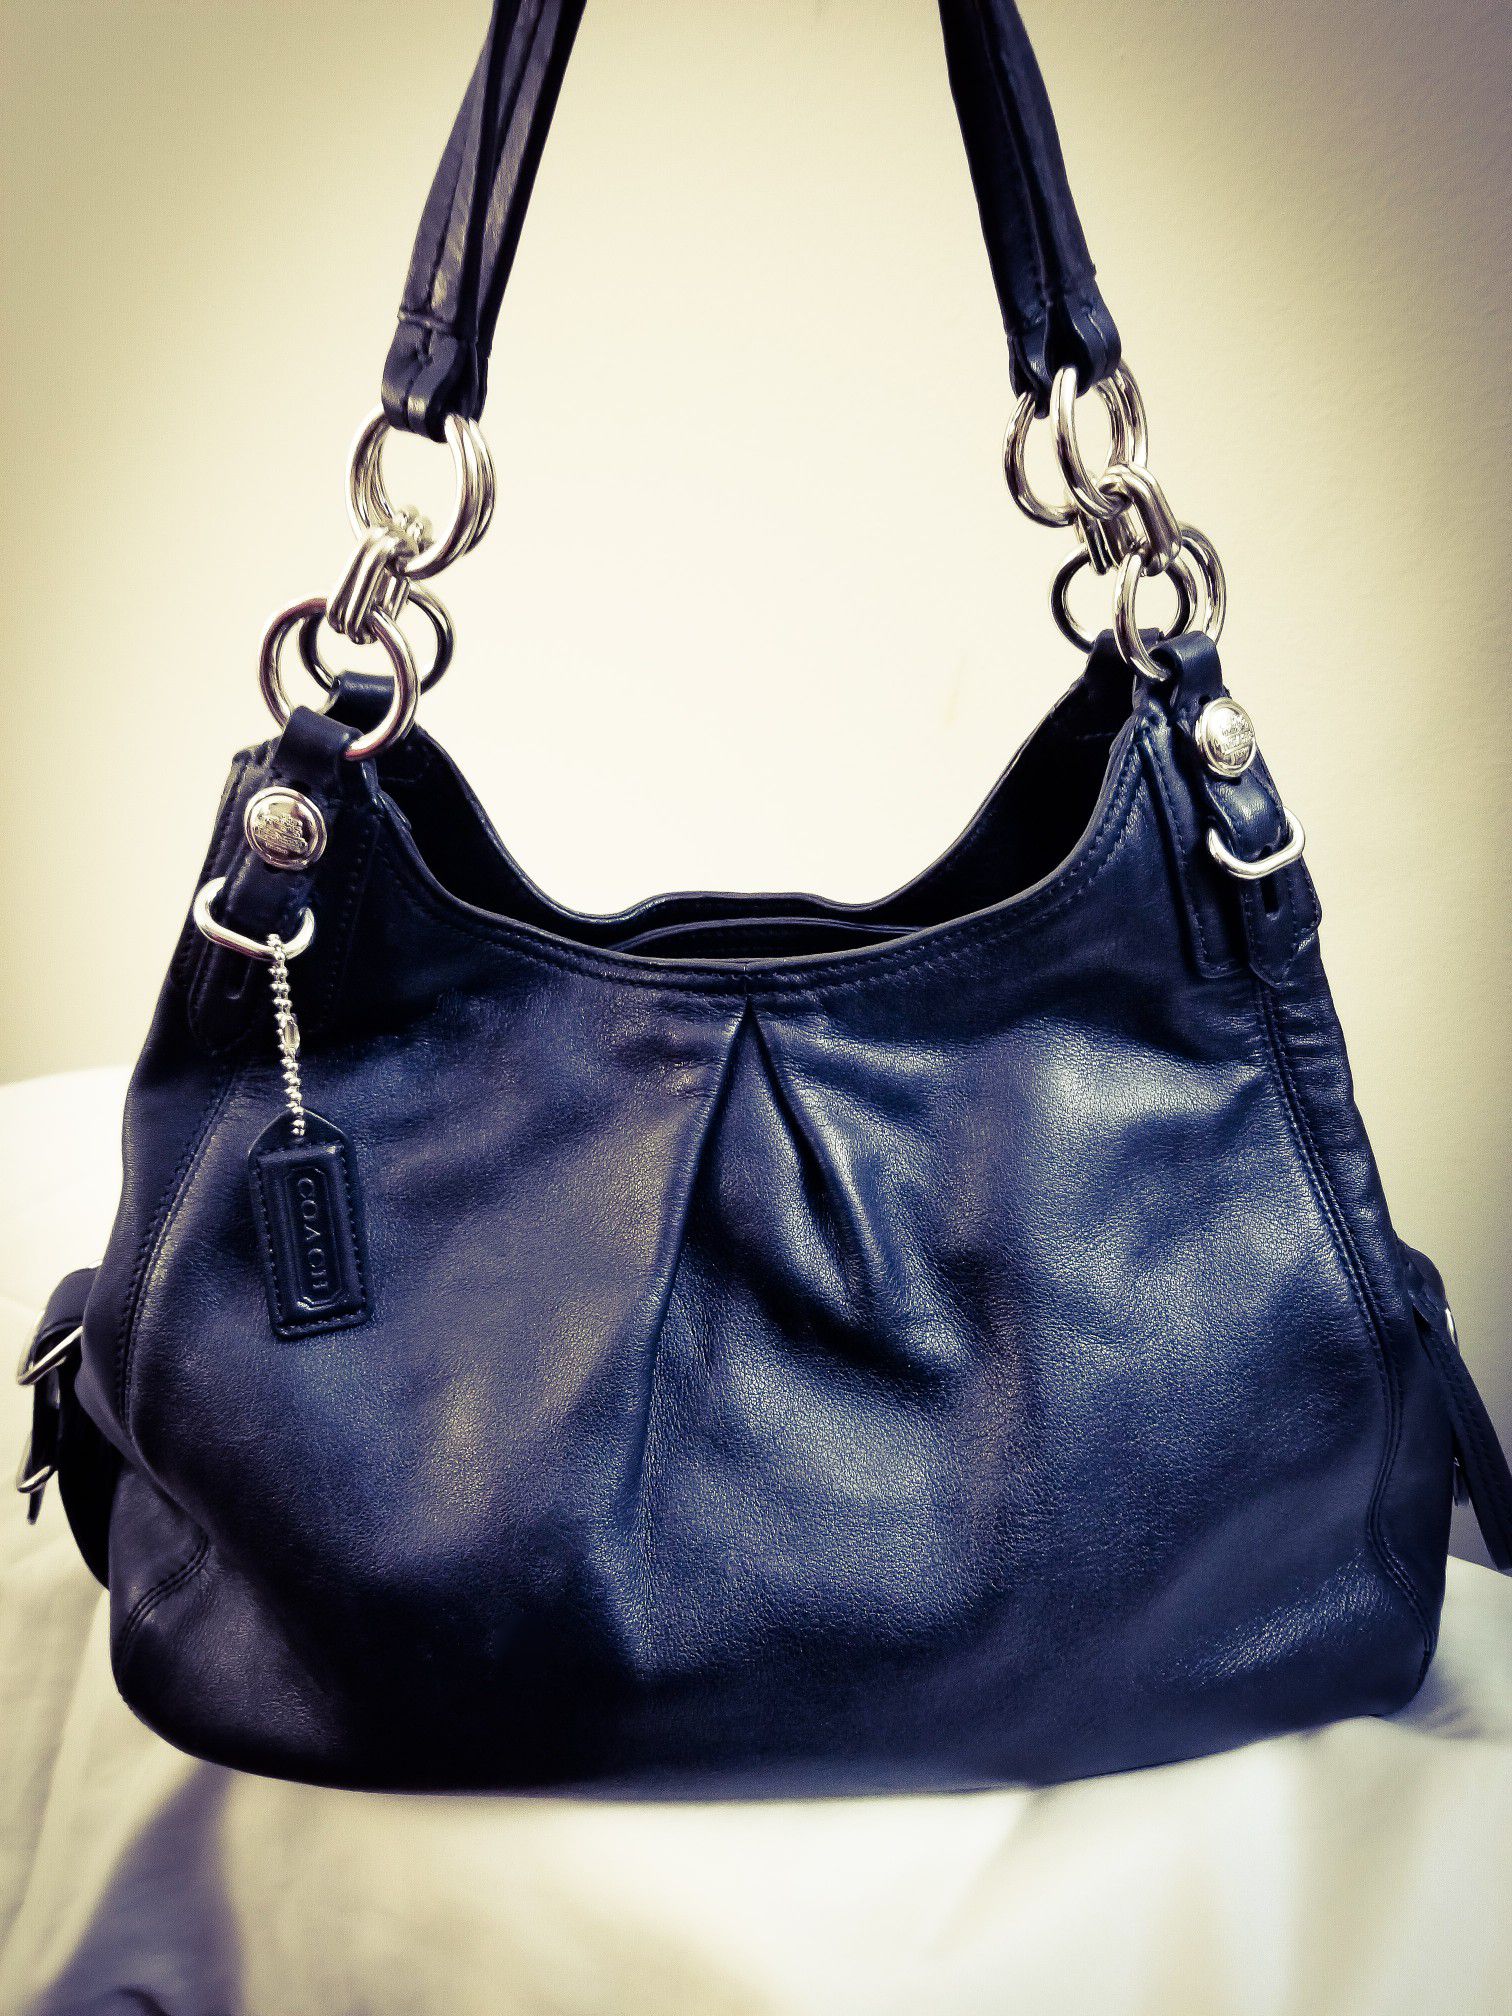 Coach Hobo Style Leather Handbag (Authentic)